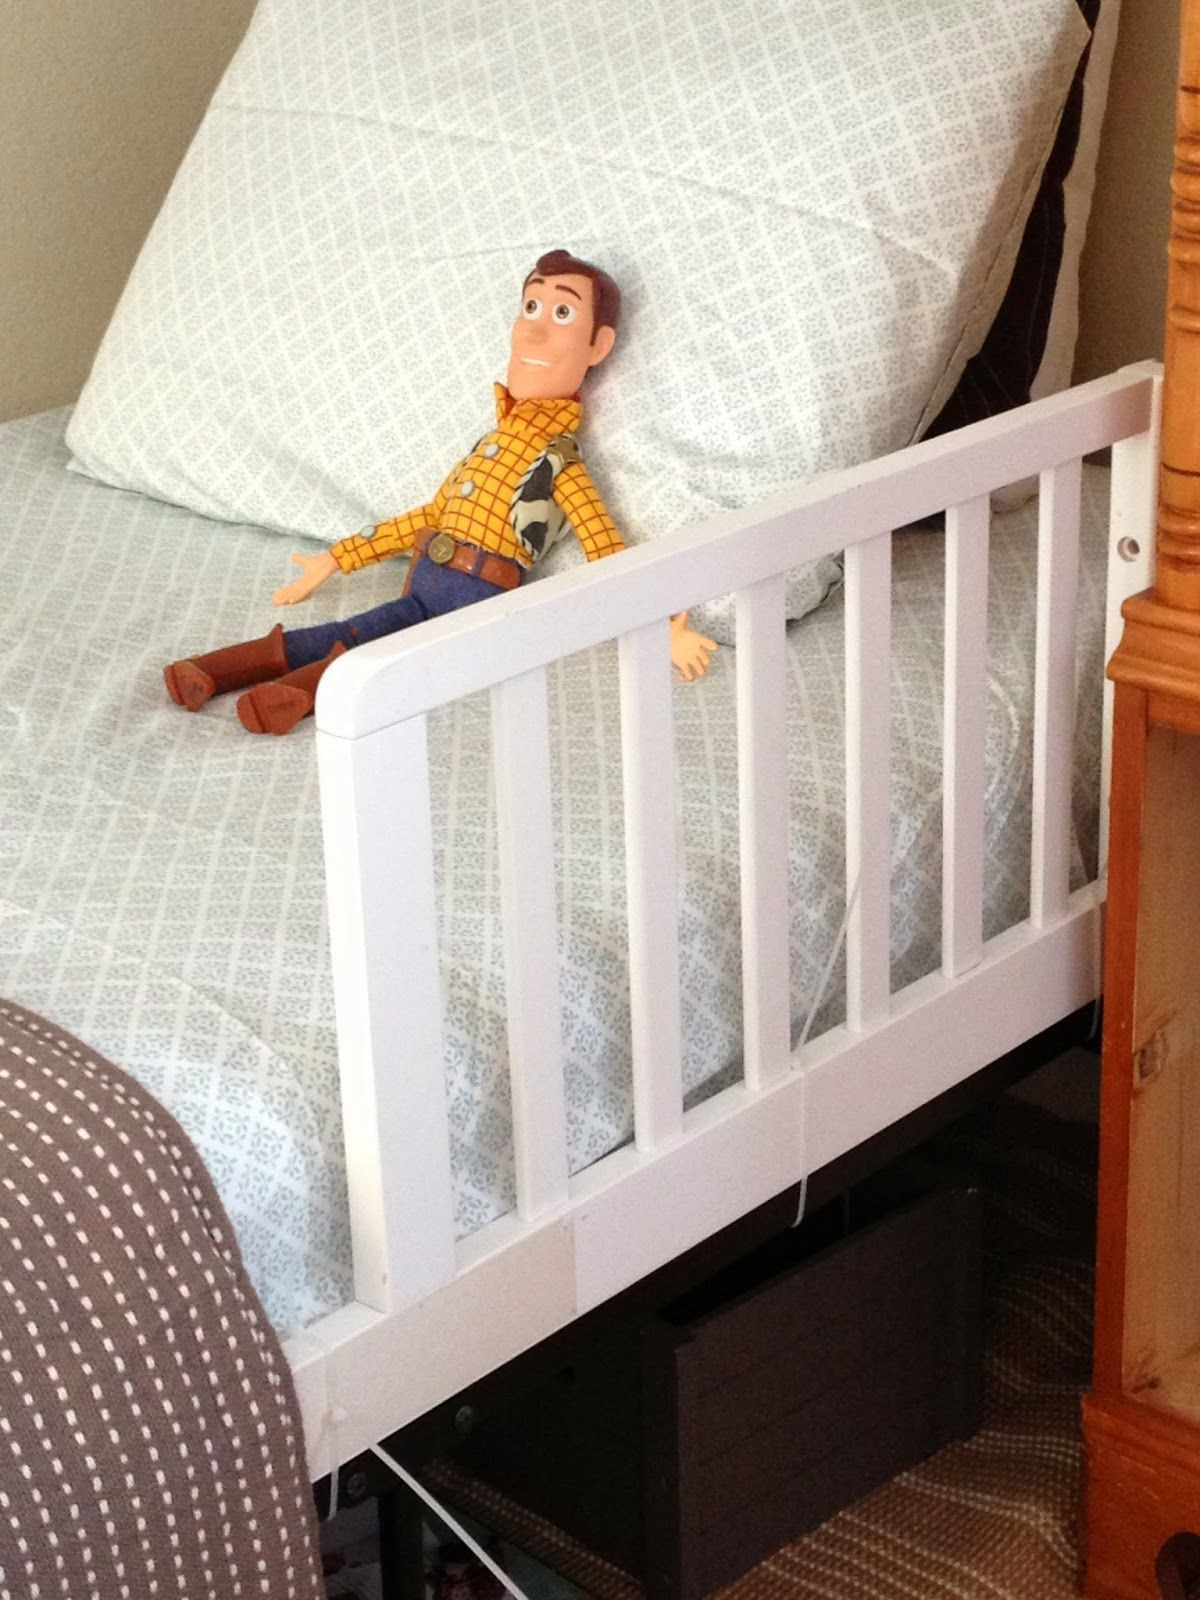 DIY Toddler Bed Rails
 Diy safety rail for a toddler bed in 2019